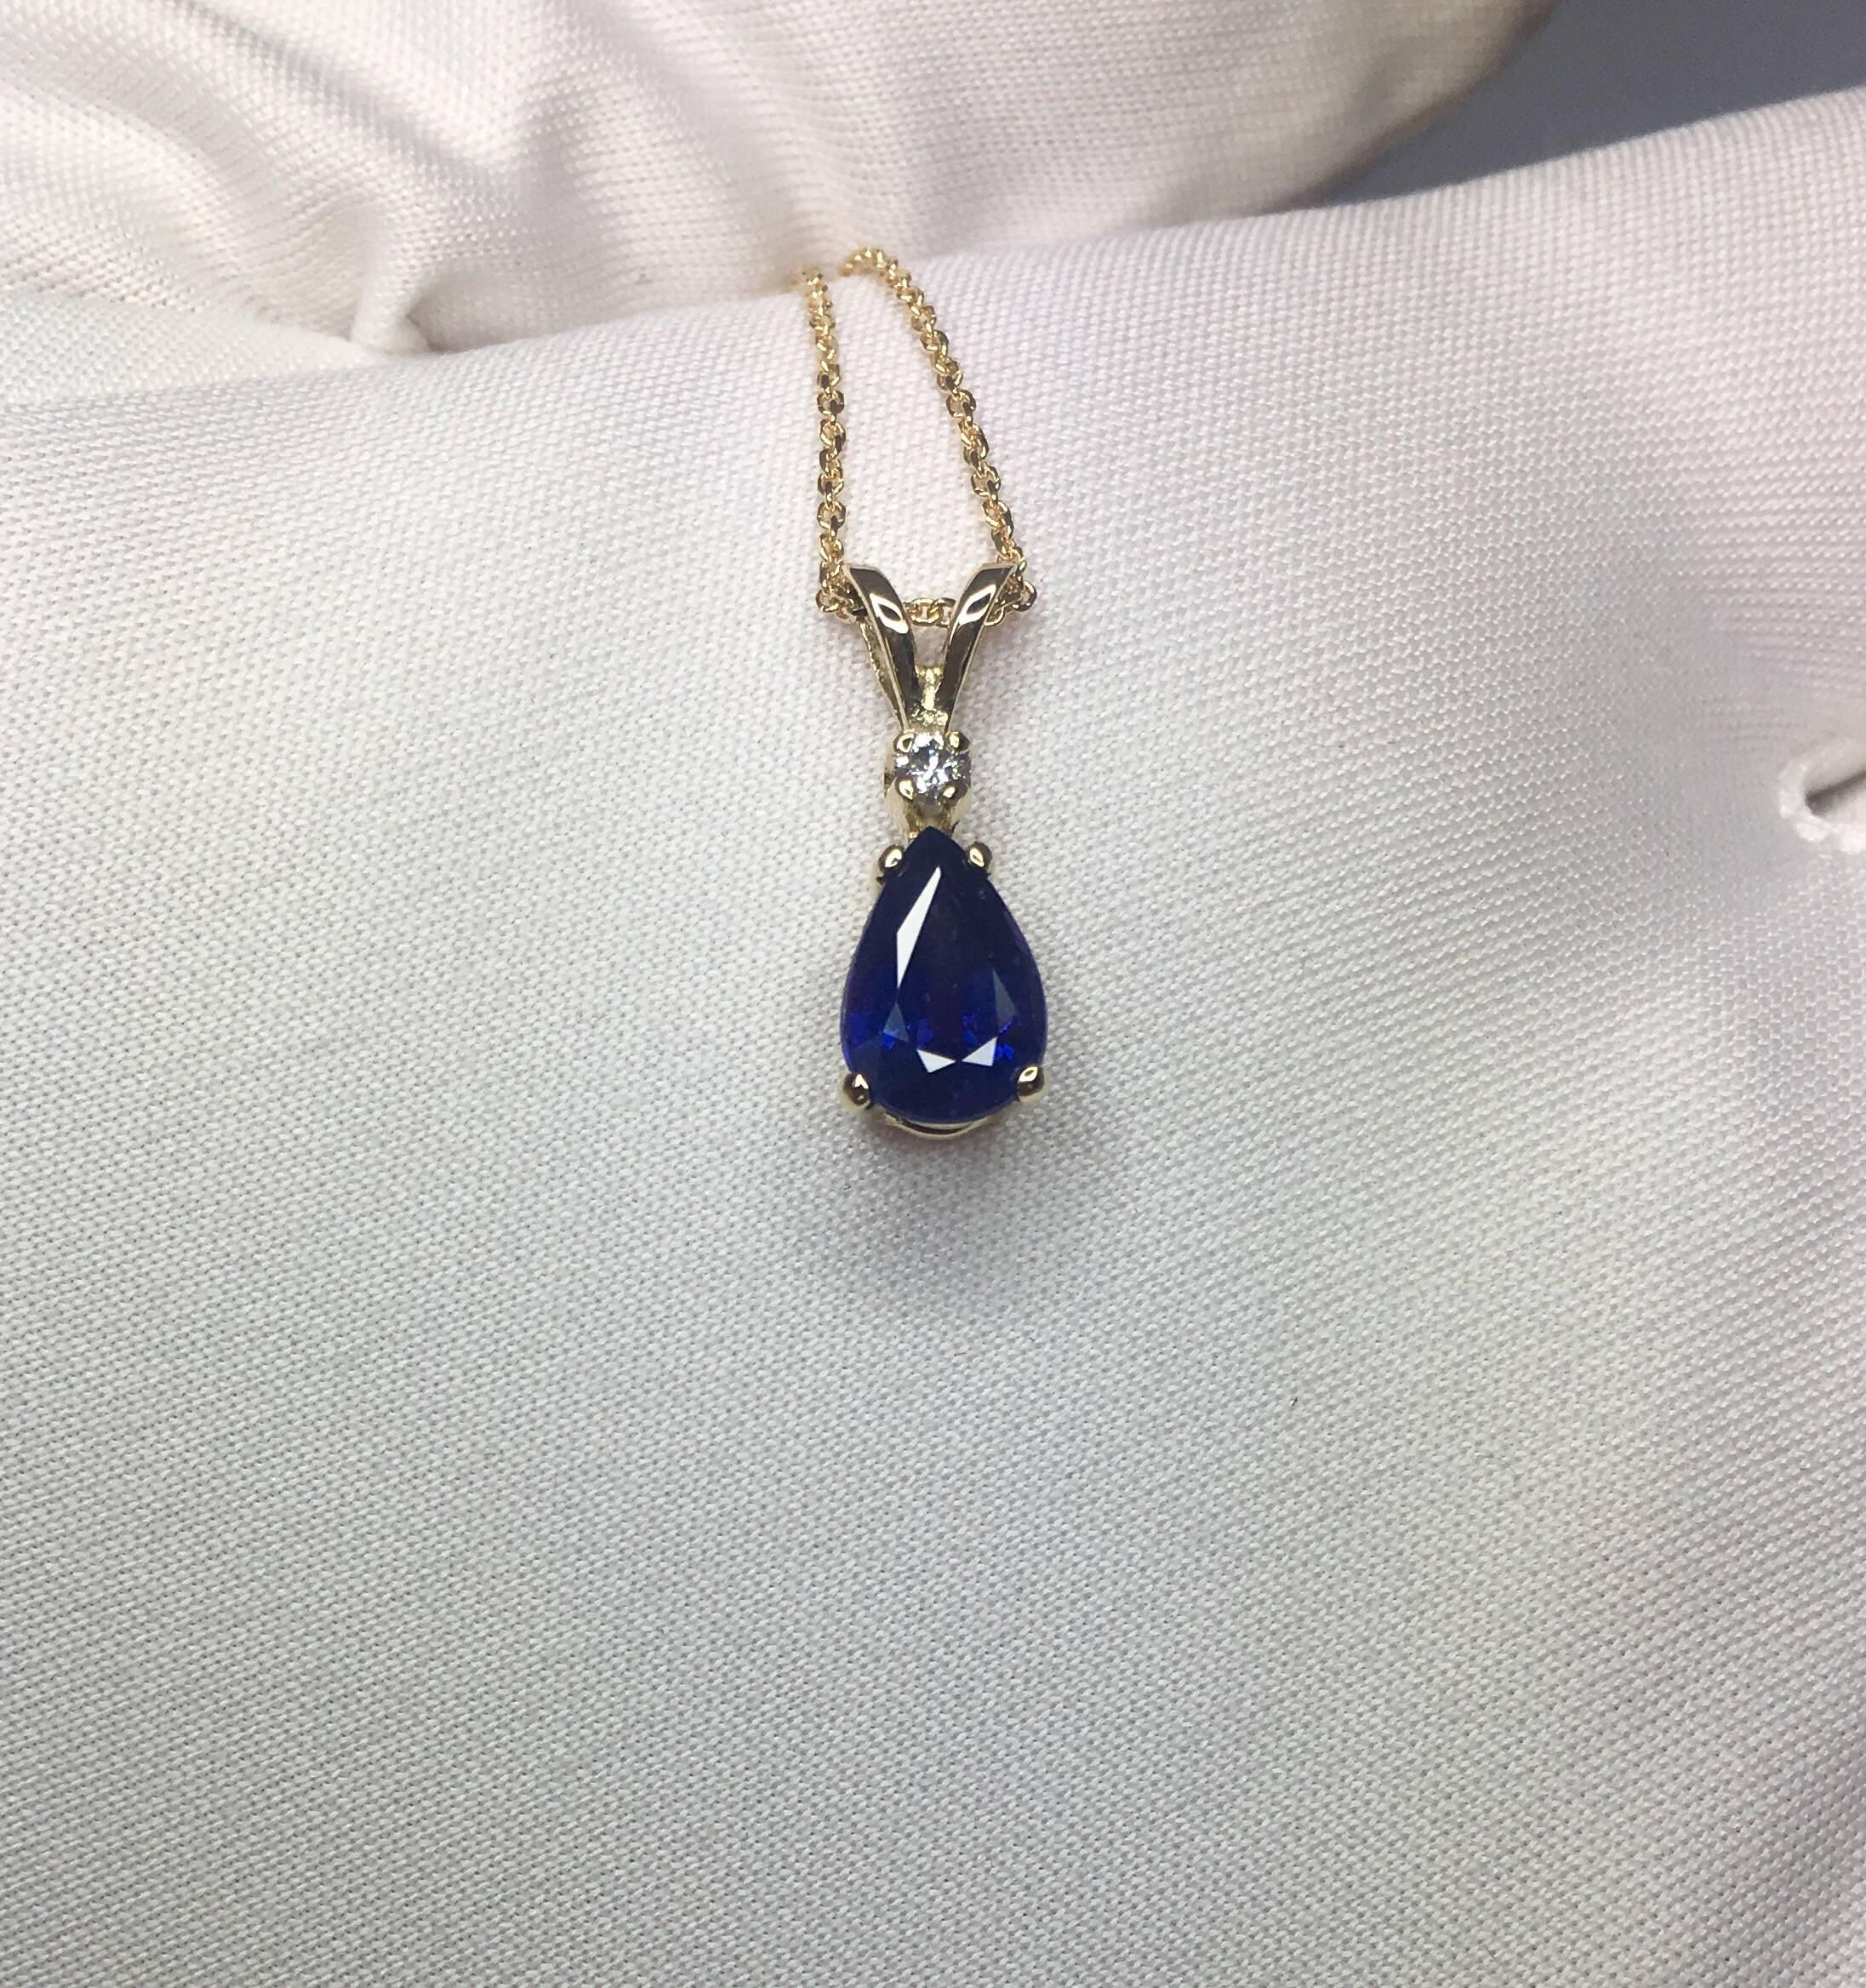 IGI Certified 1.32 Carat Color Change Blue Purple Sapphire Diamond Gold Pendant 1